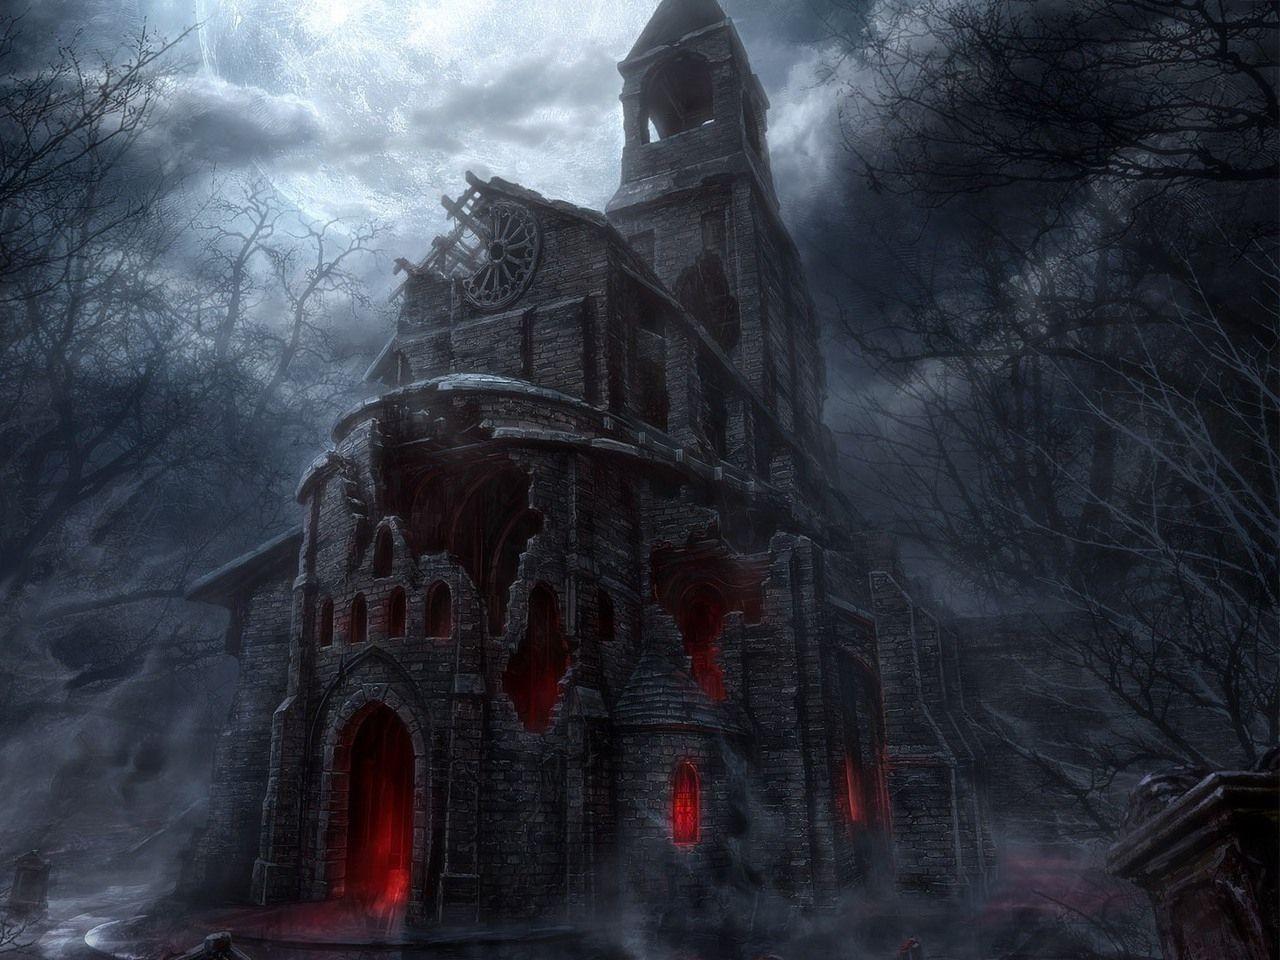 Spooky Haunted House Artworks.net Blog